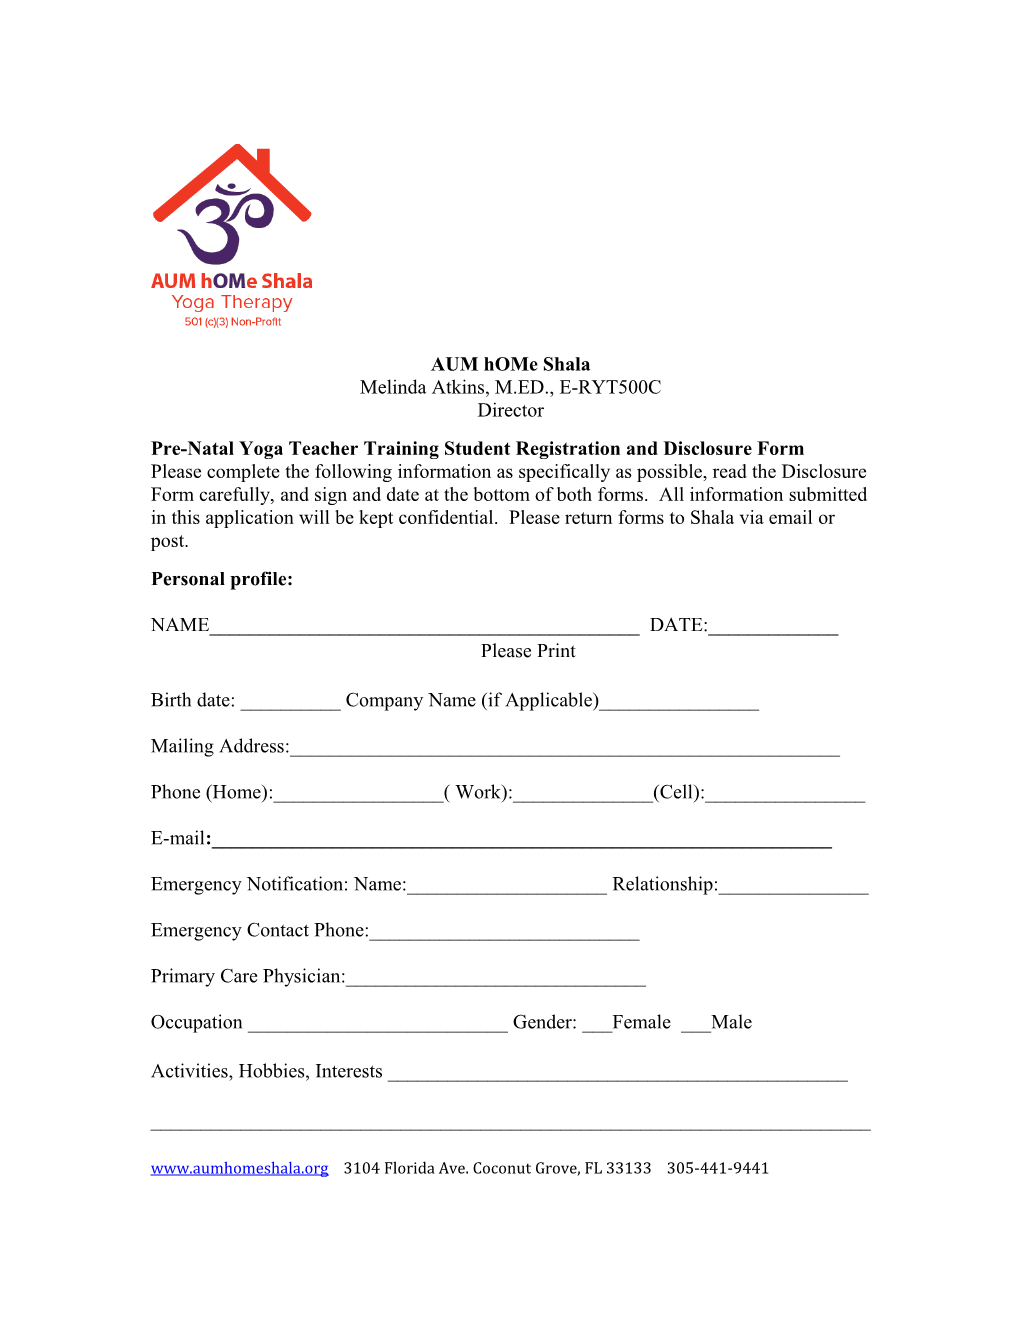 Pre-Natal Yoga Teacher Training Student Registration and Disclosure Form